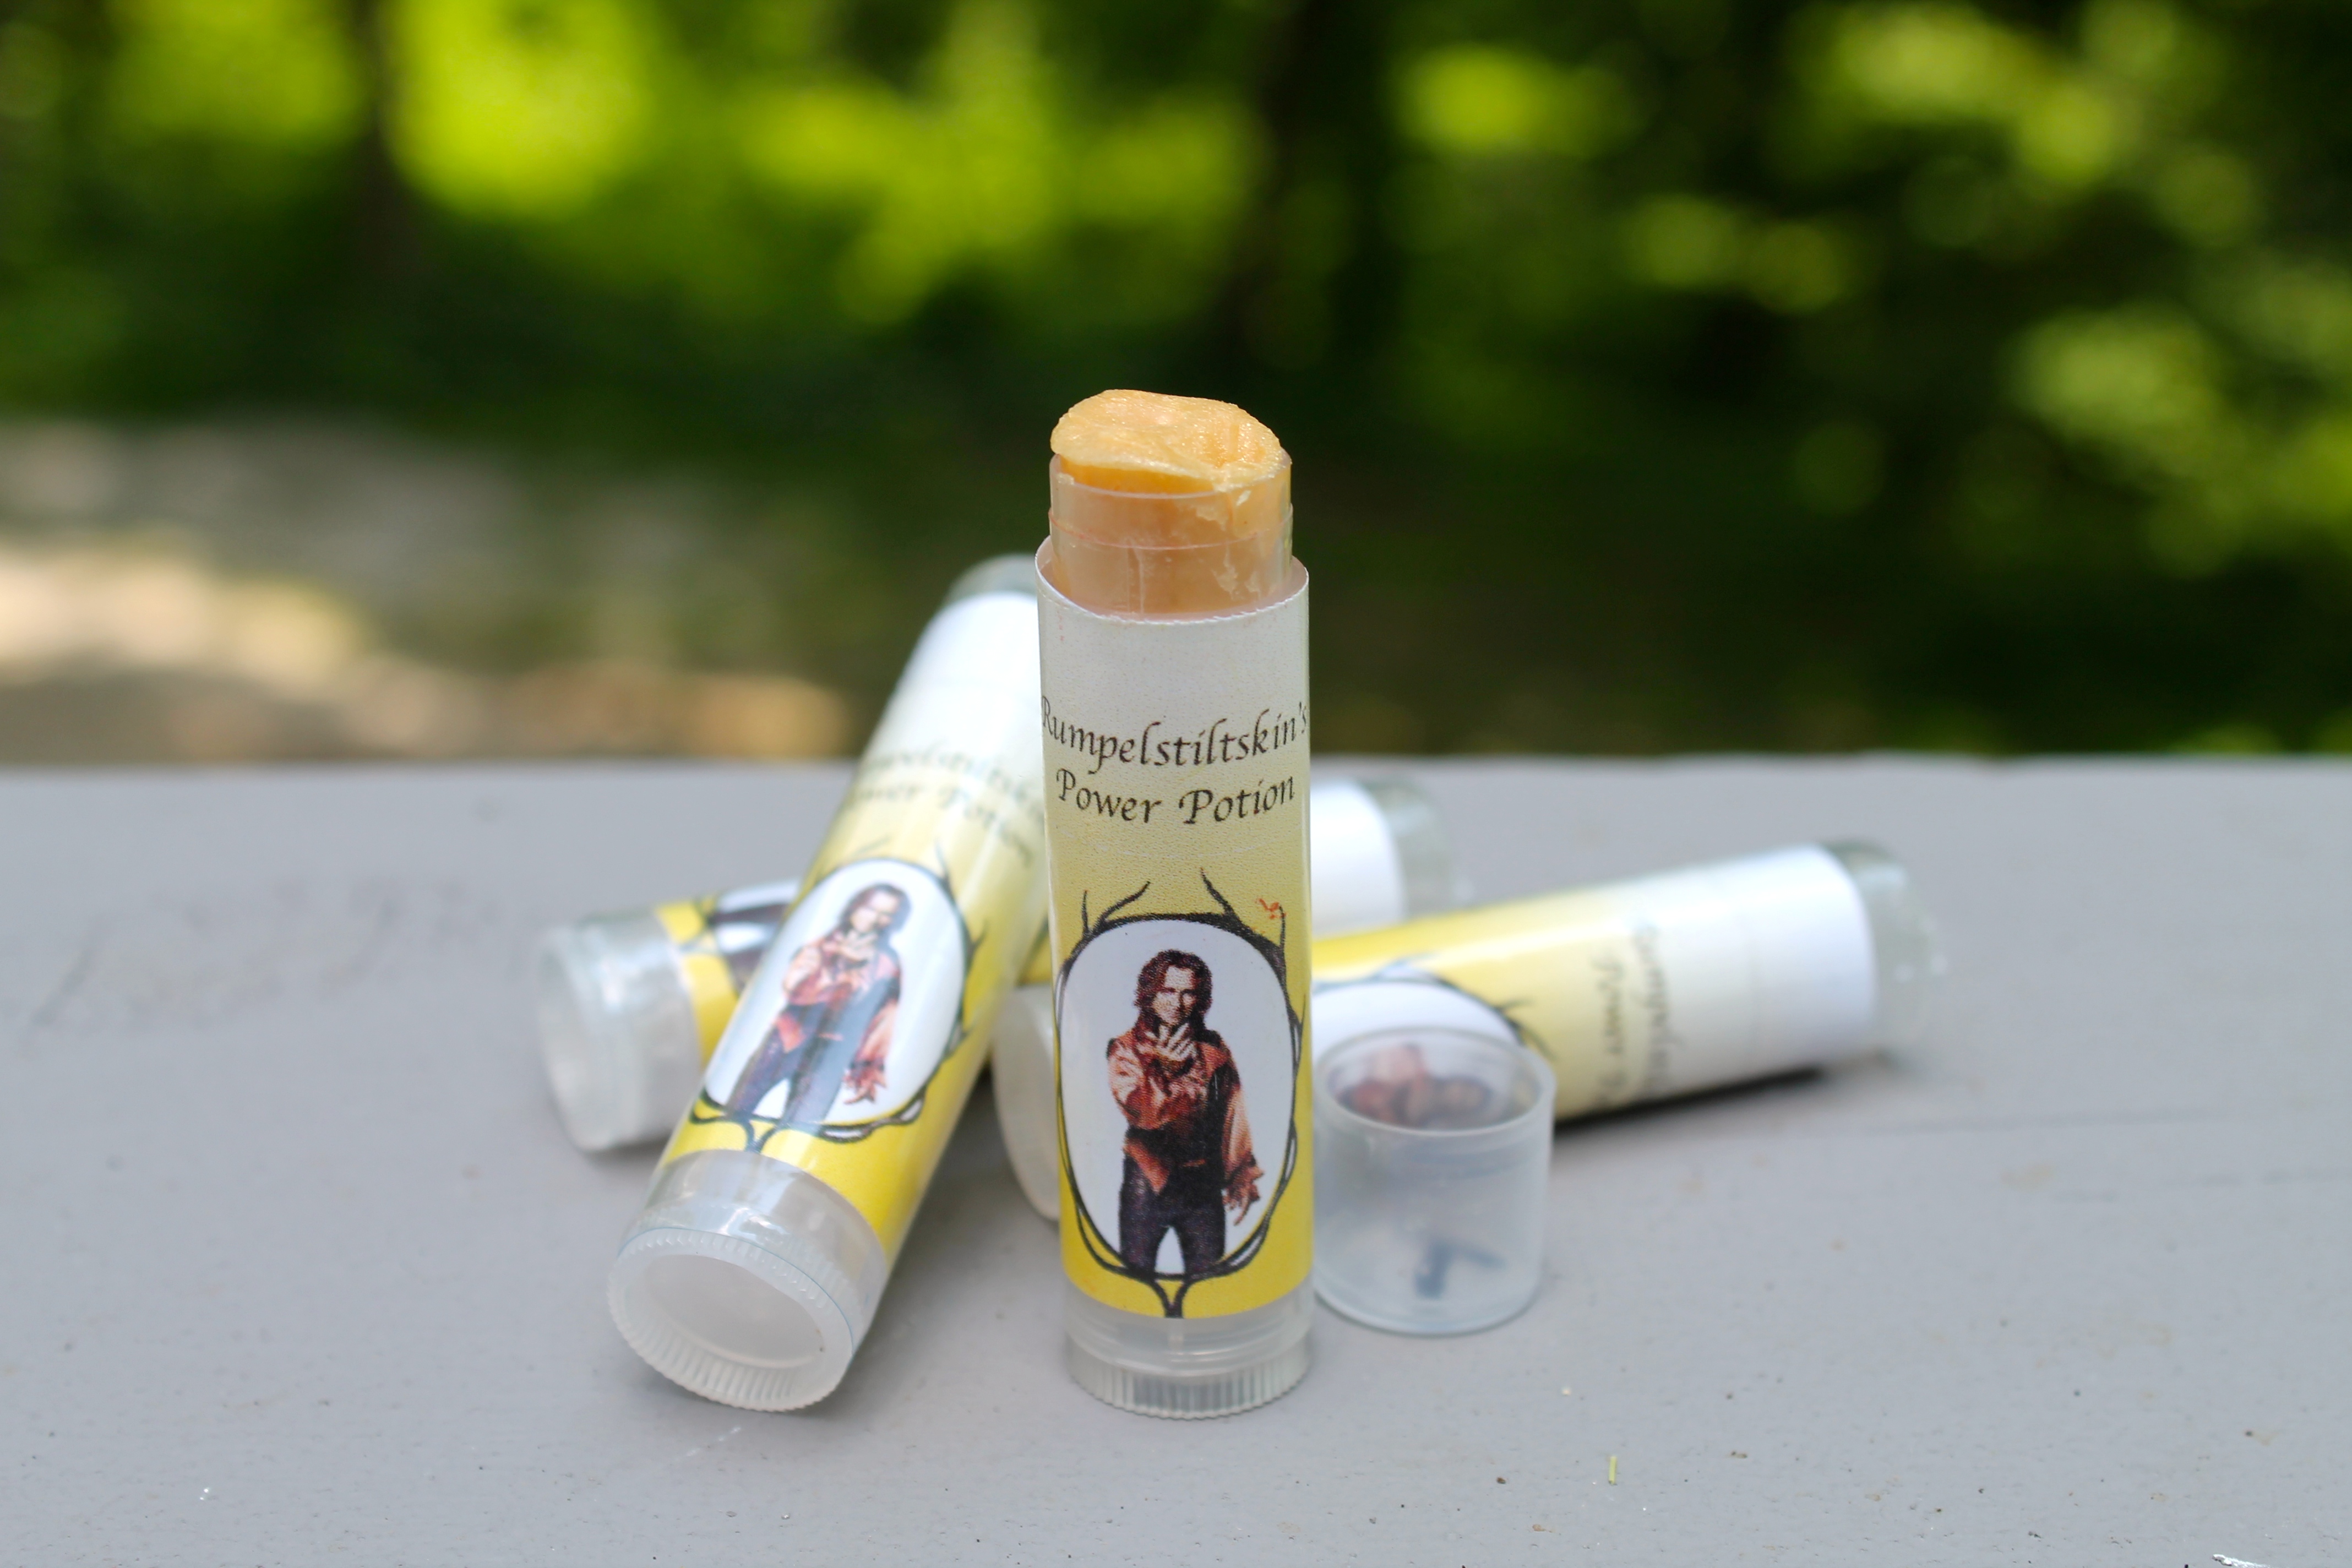 Rumpelstiltskin's Power potion lip balm in cinnamon scent with Cayenne